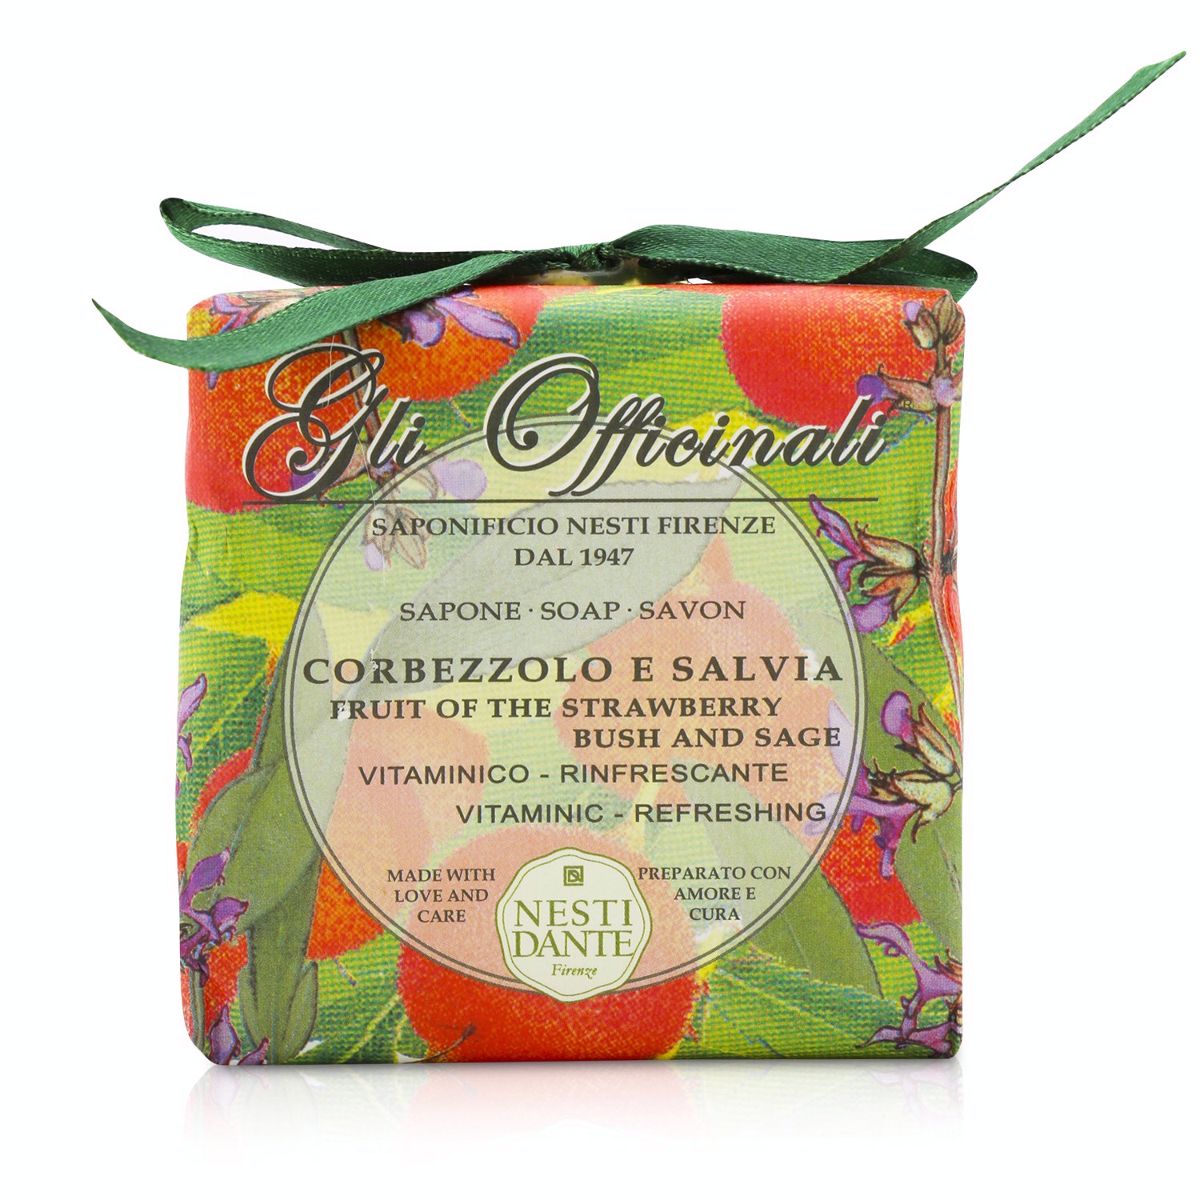 Gli Officinali Soap - Fruit Of The Strawberry Bush  Sage - Vitaminic  Refreshing Nesti Dante Image